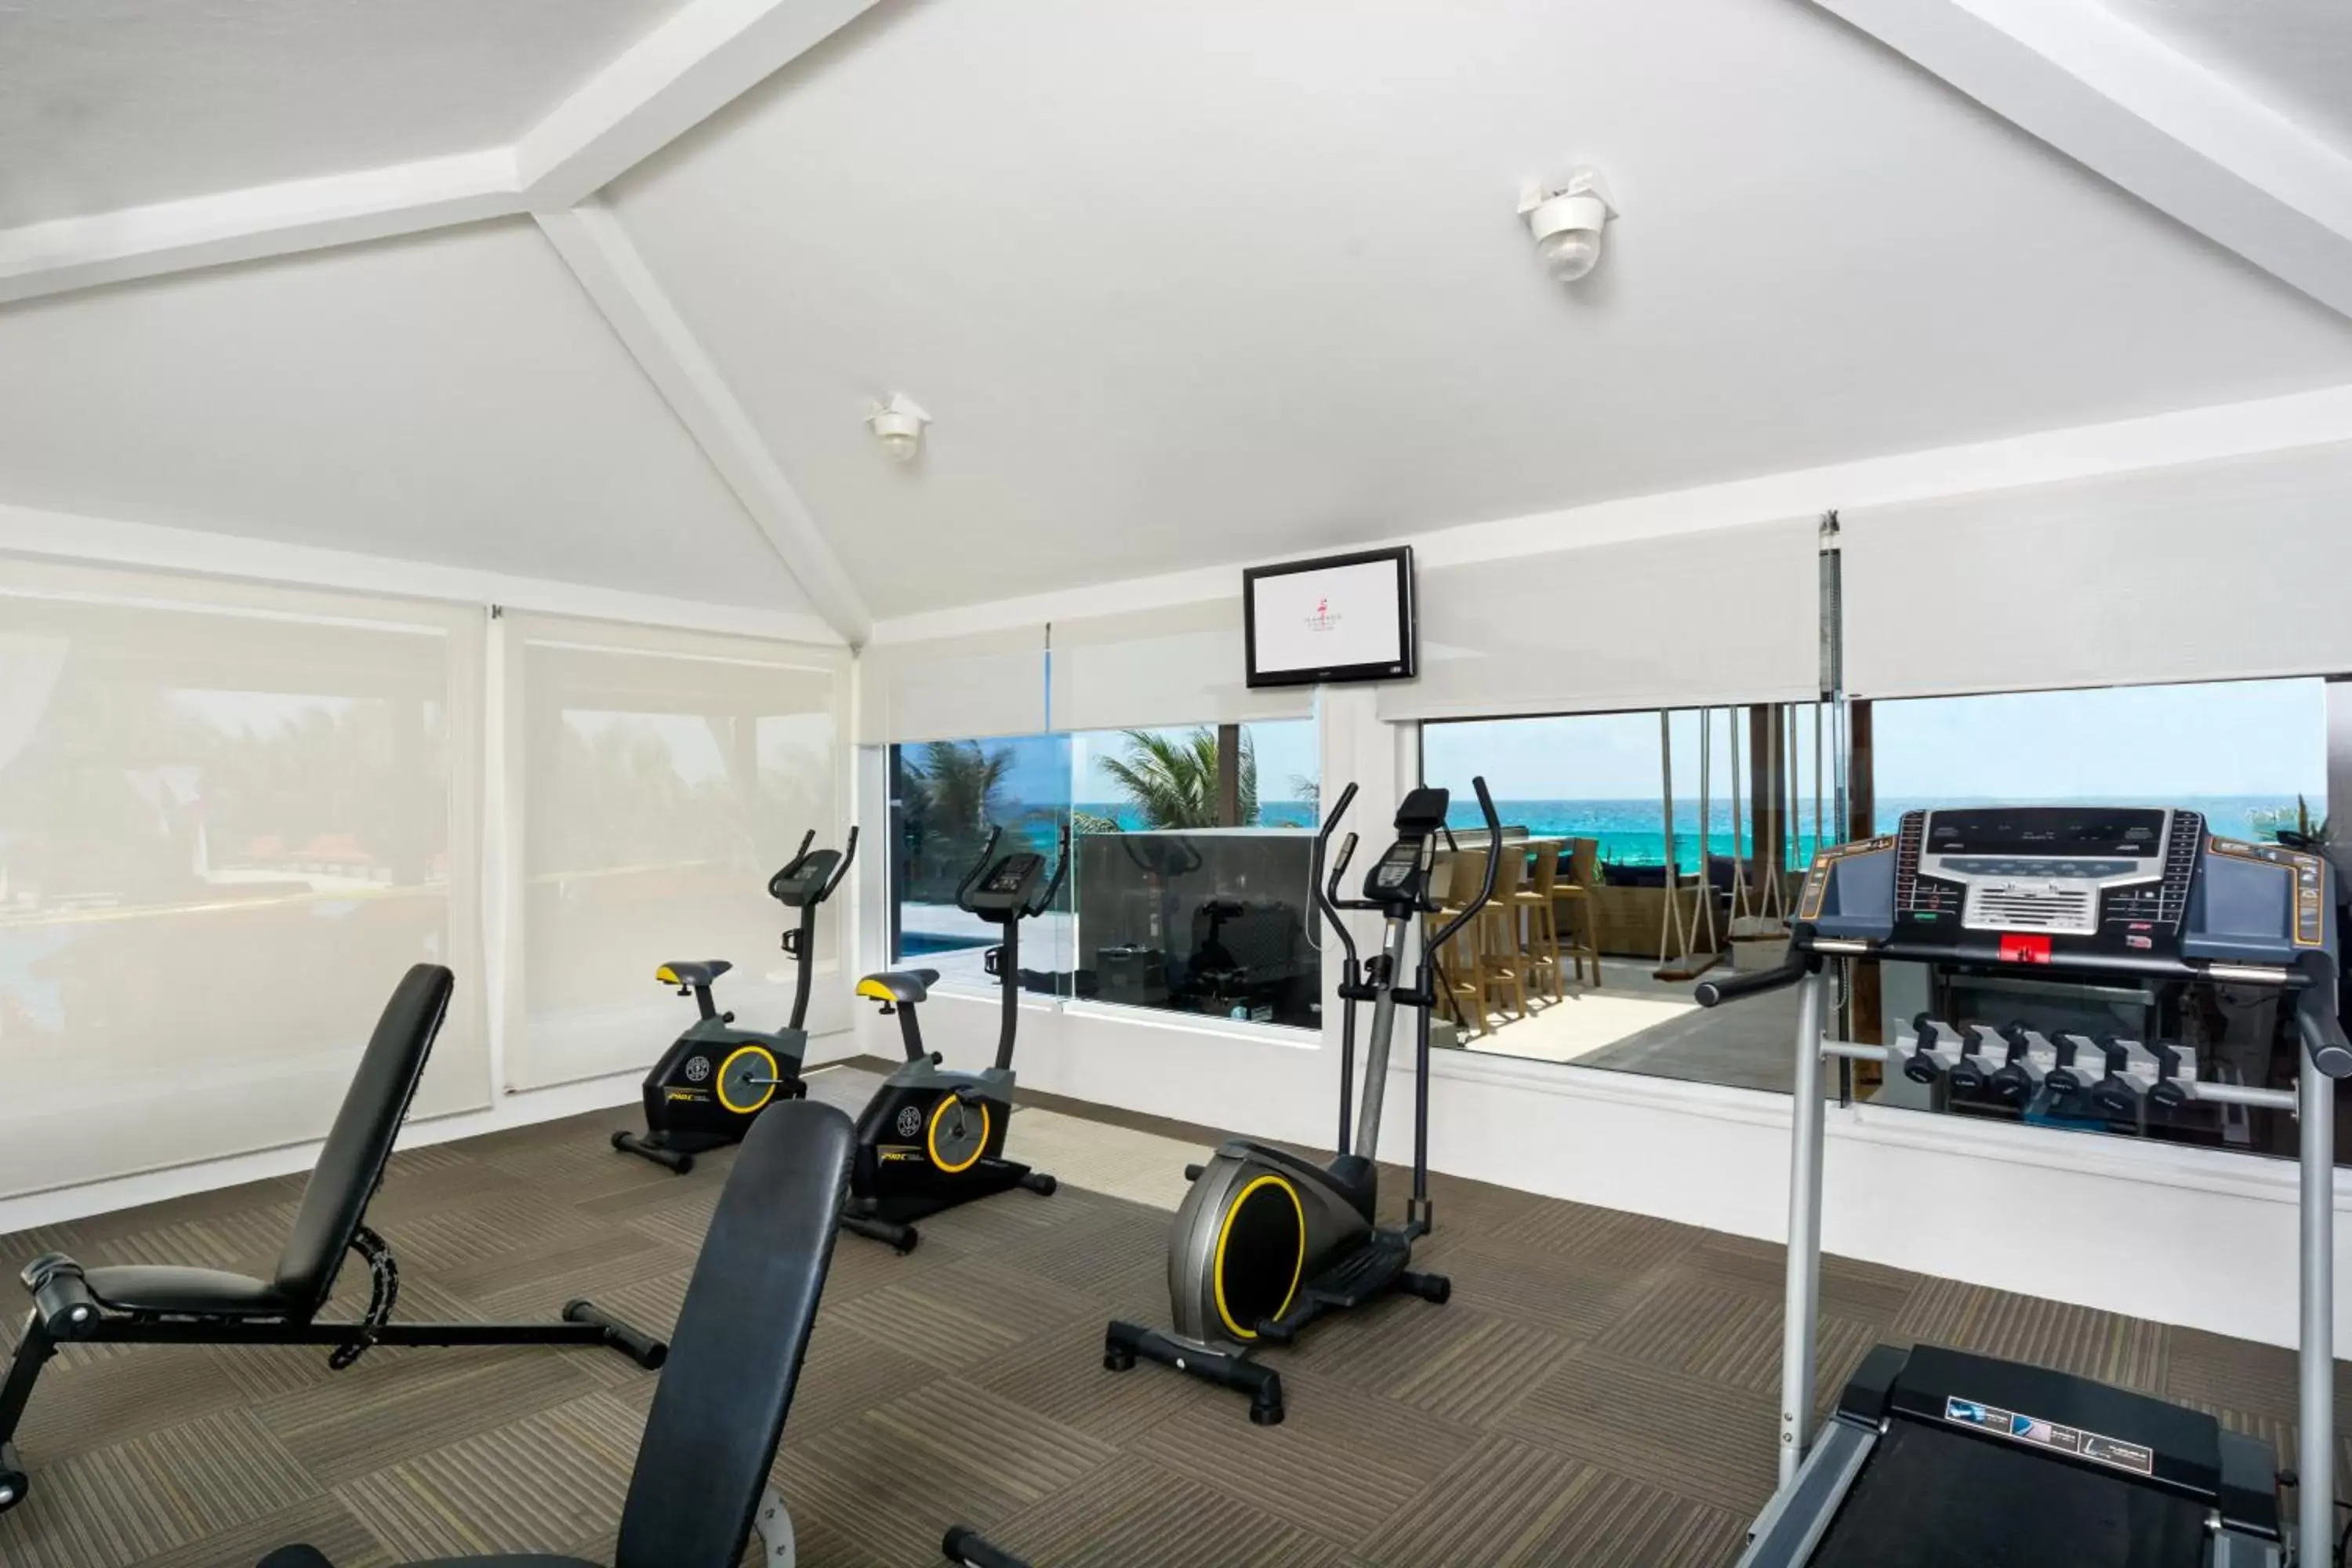 Fitness centre/facilities, Fitness Center/Facilities in Flamingo Cancun Resort